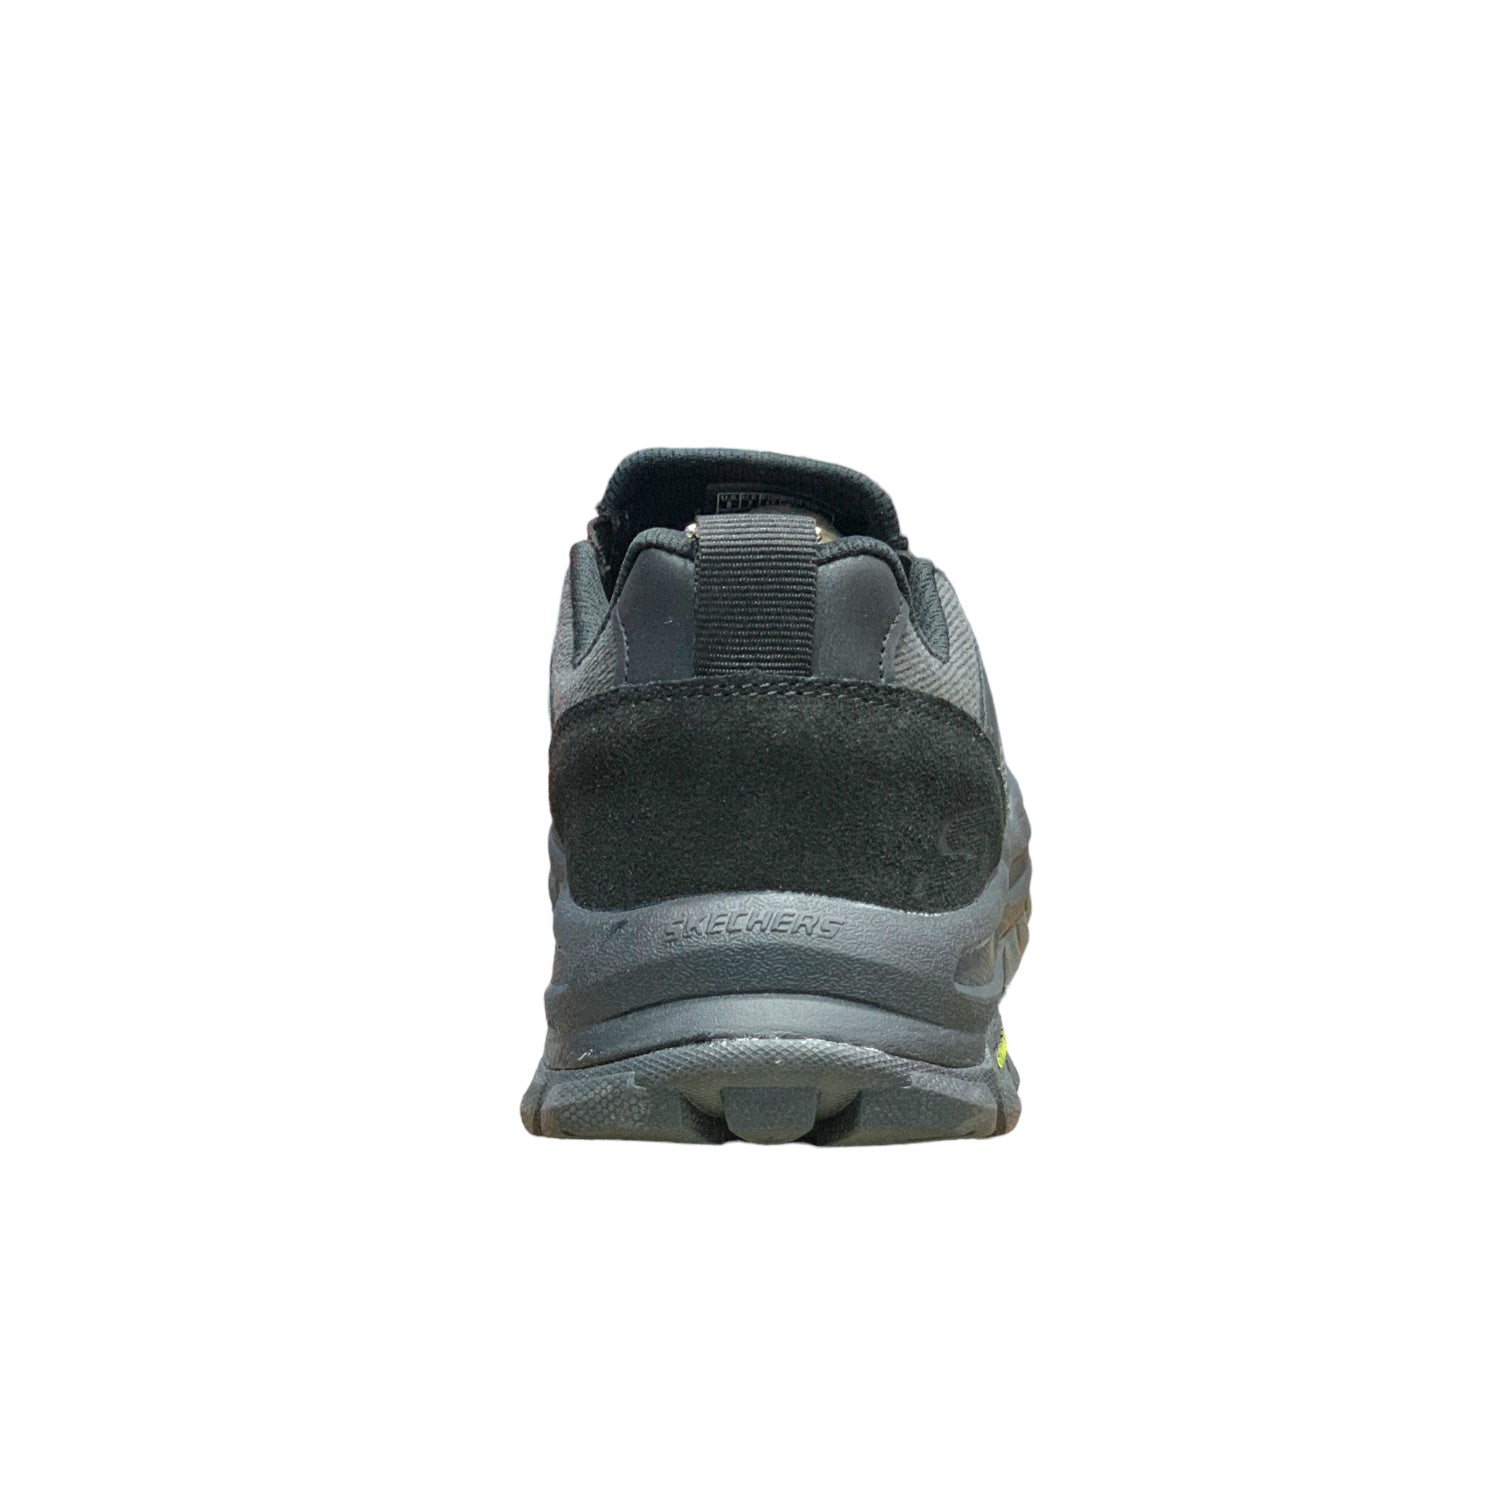 Skechers Good year Tyre Sole Premium Black Gray(Dot Perfect)